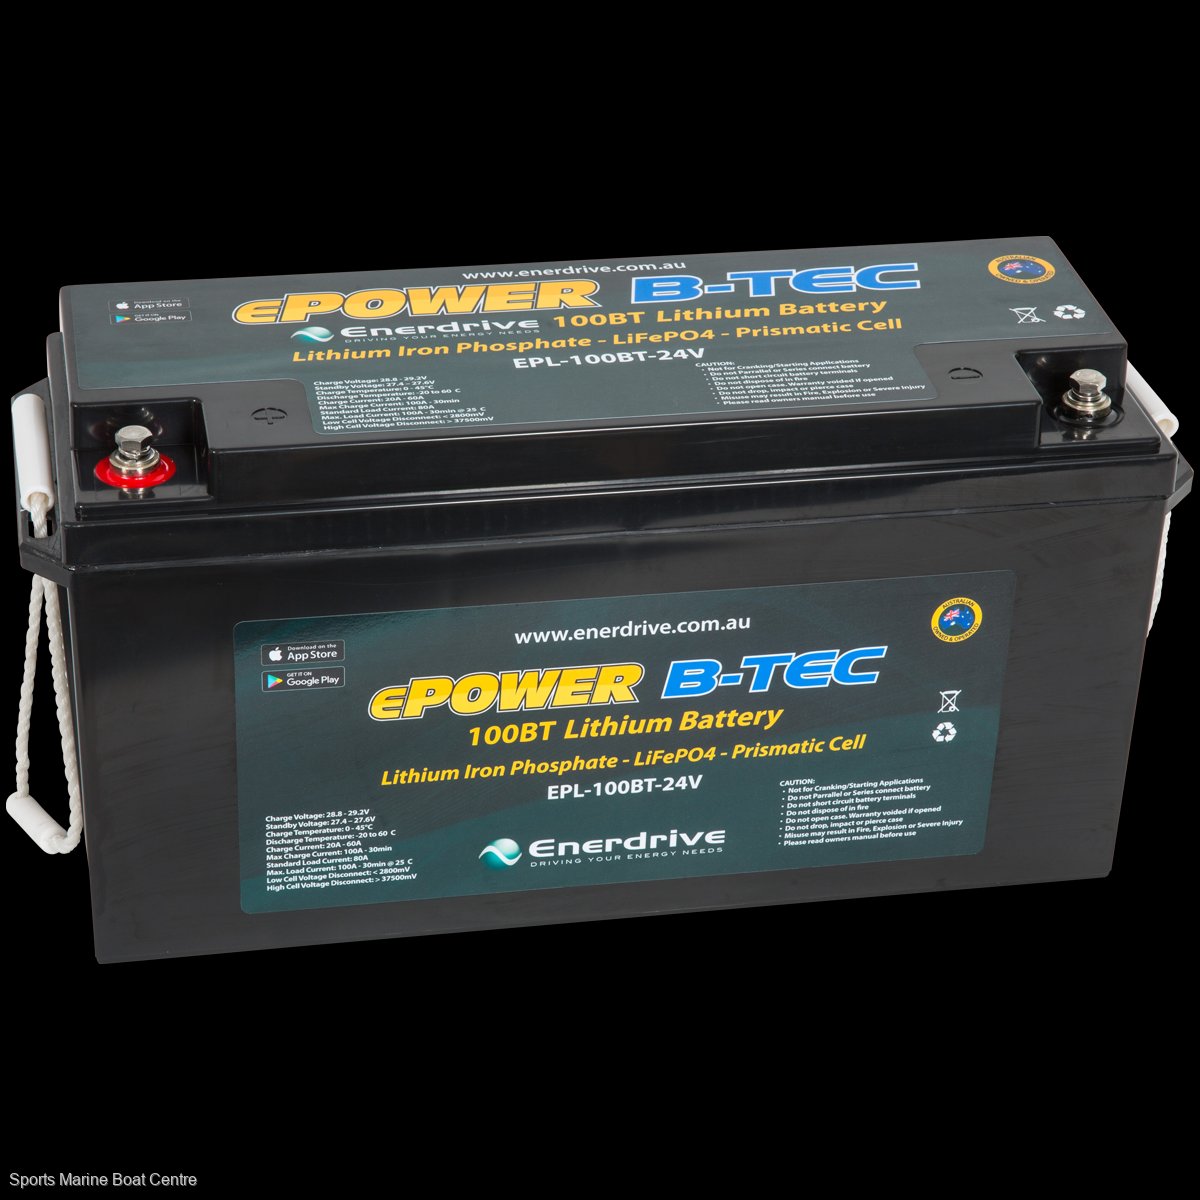 Enerdrive lithium batteries in stock now!